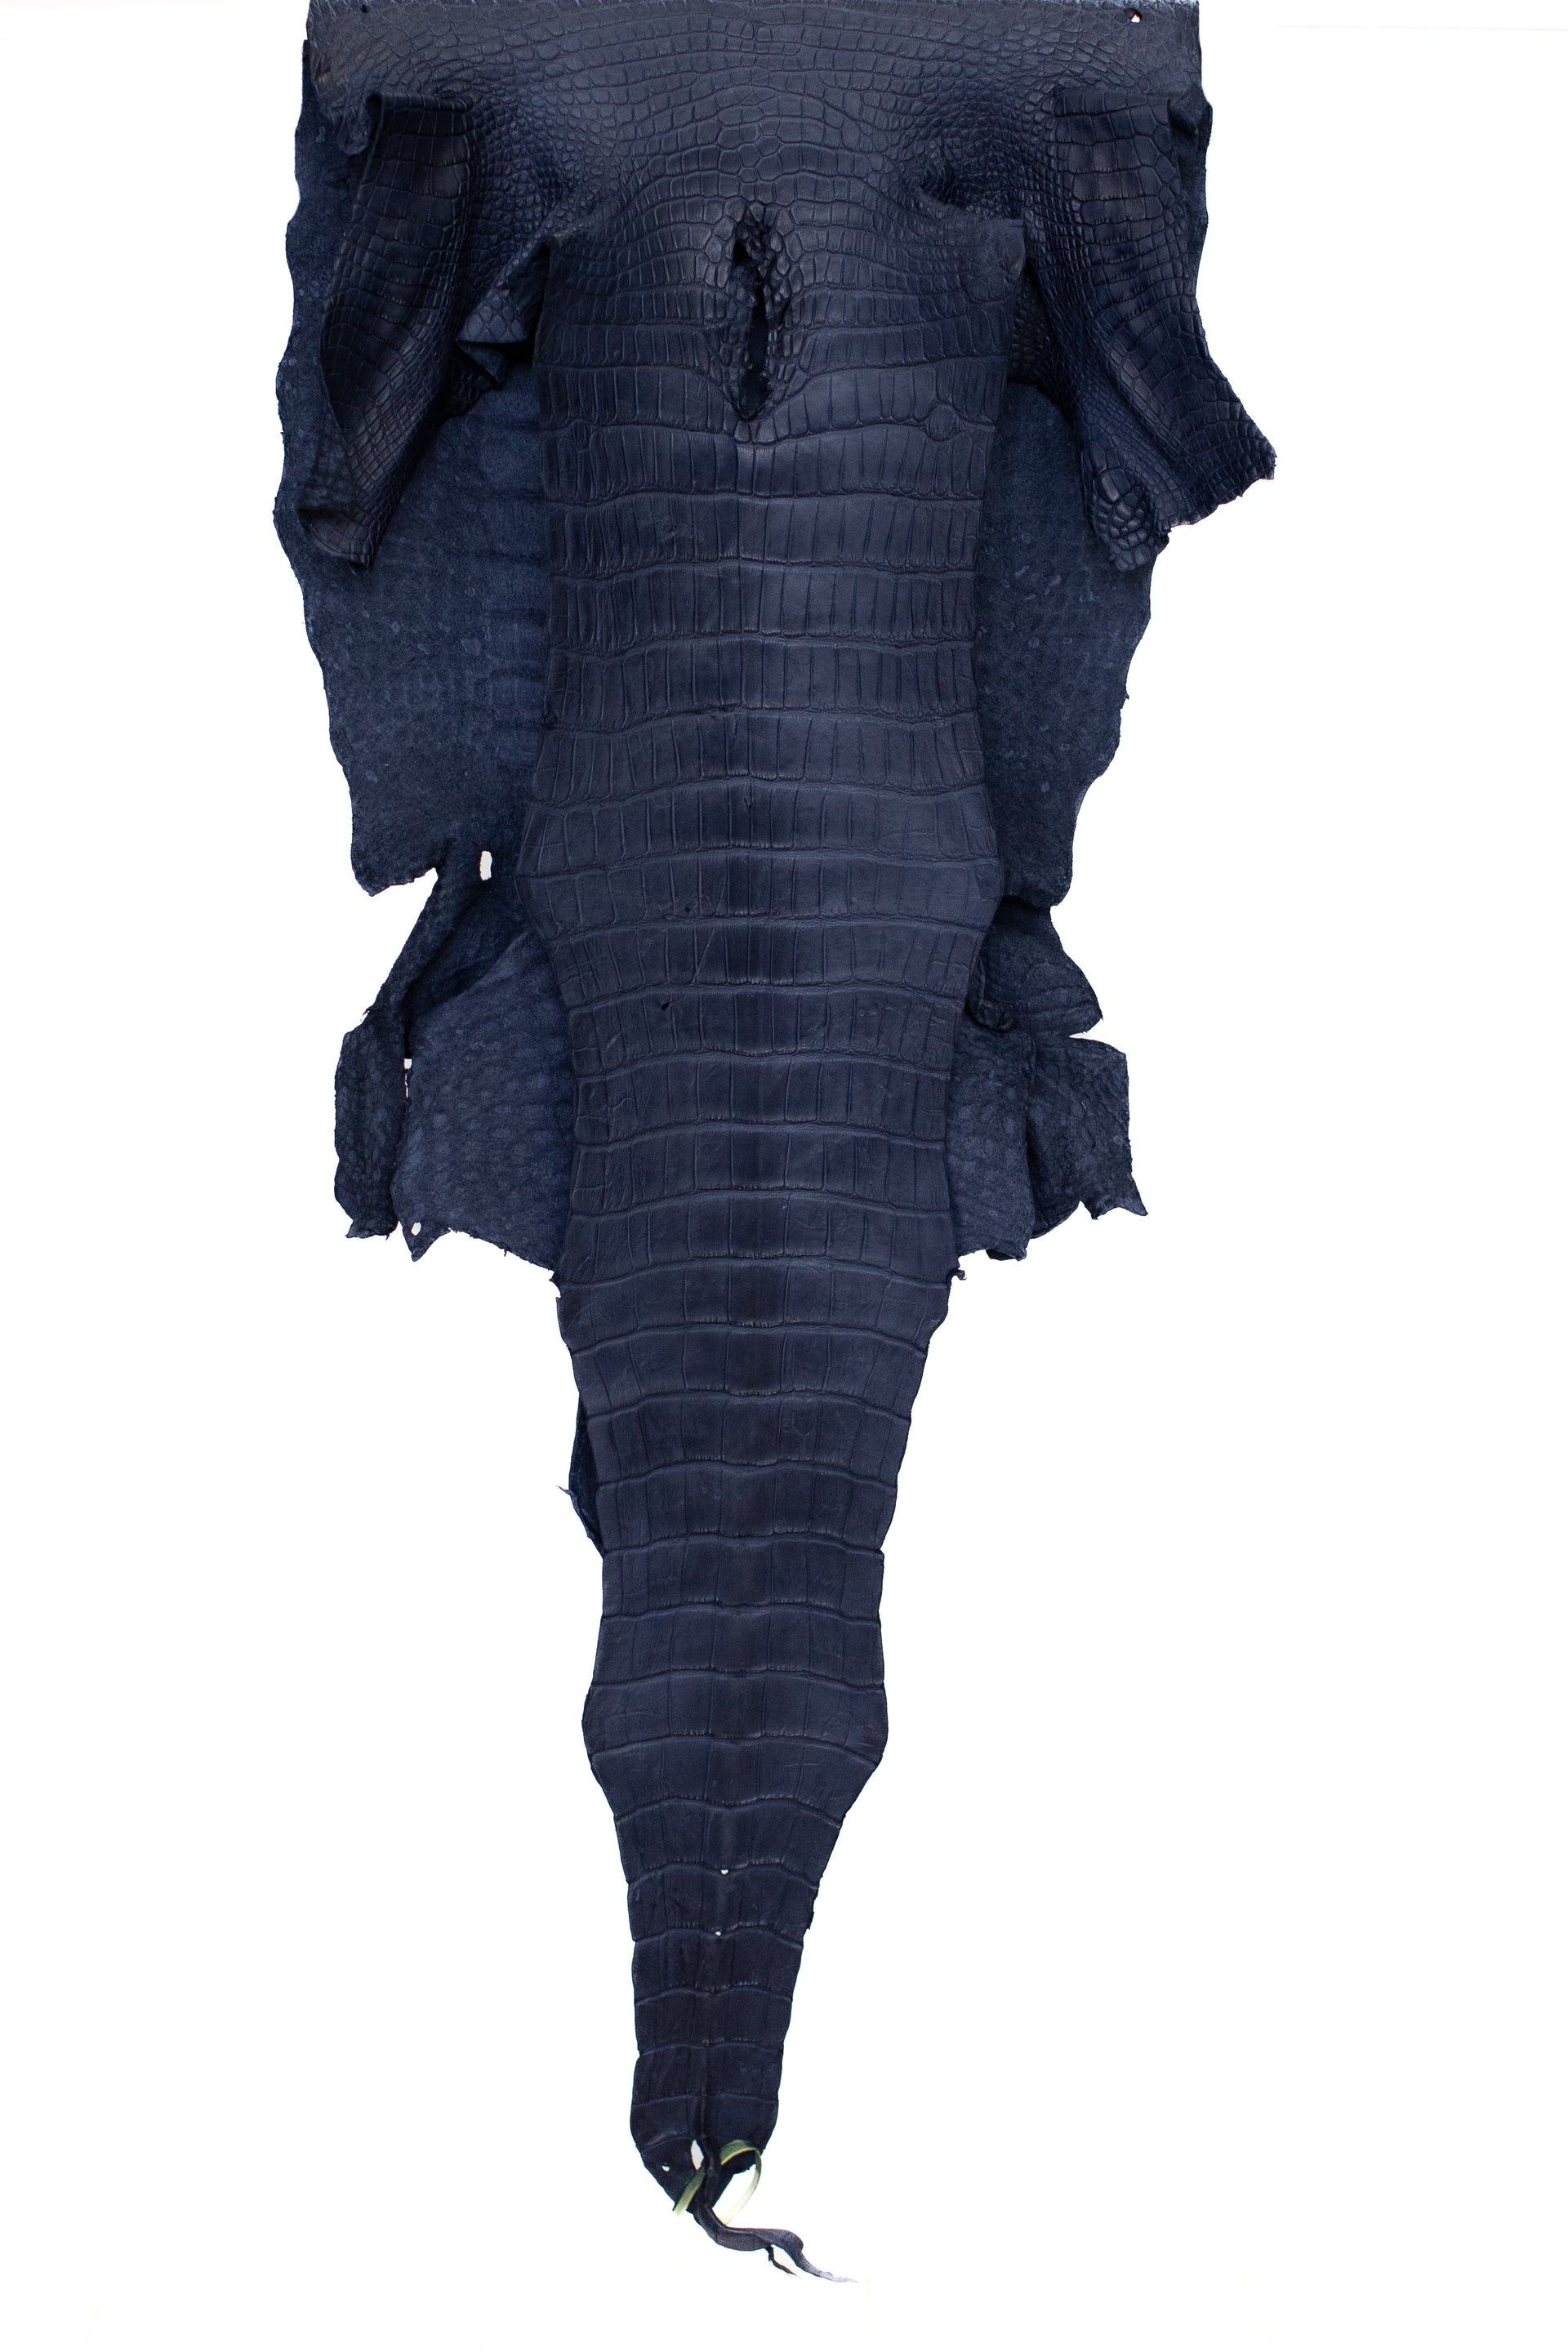 47 cm Grade 3/4 Navy Blue Matte Wild American Alligator Leather - Tag: LA22-0031207